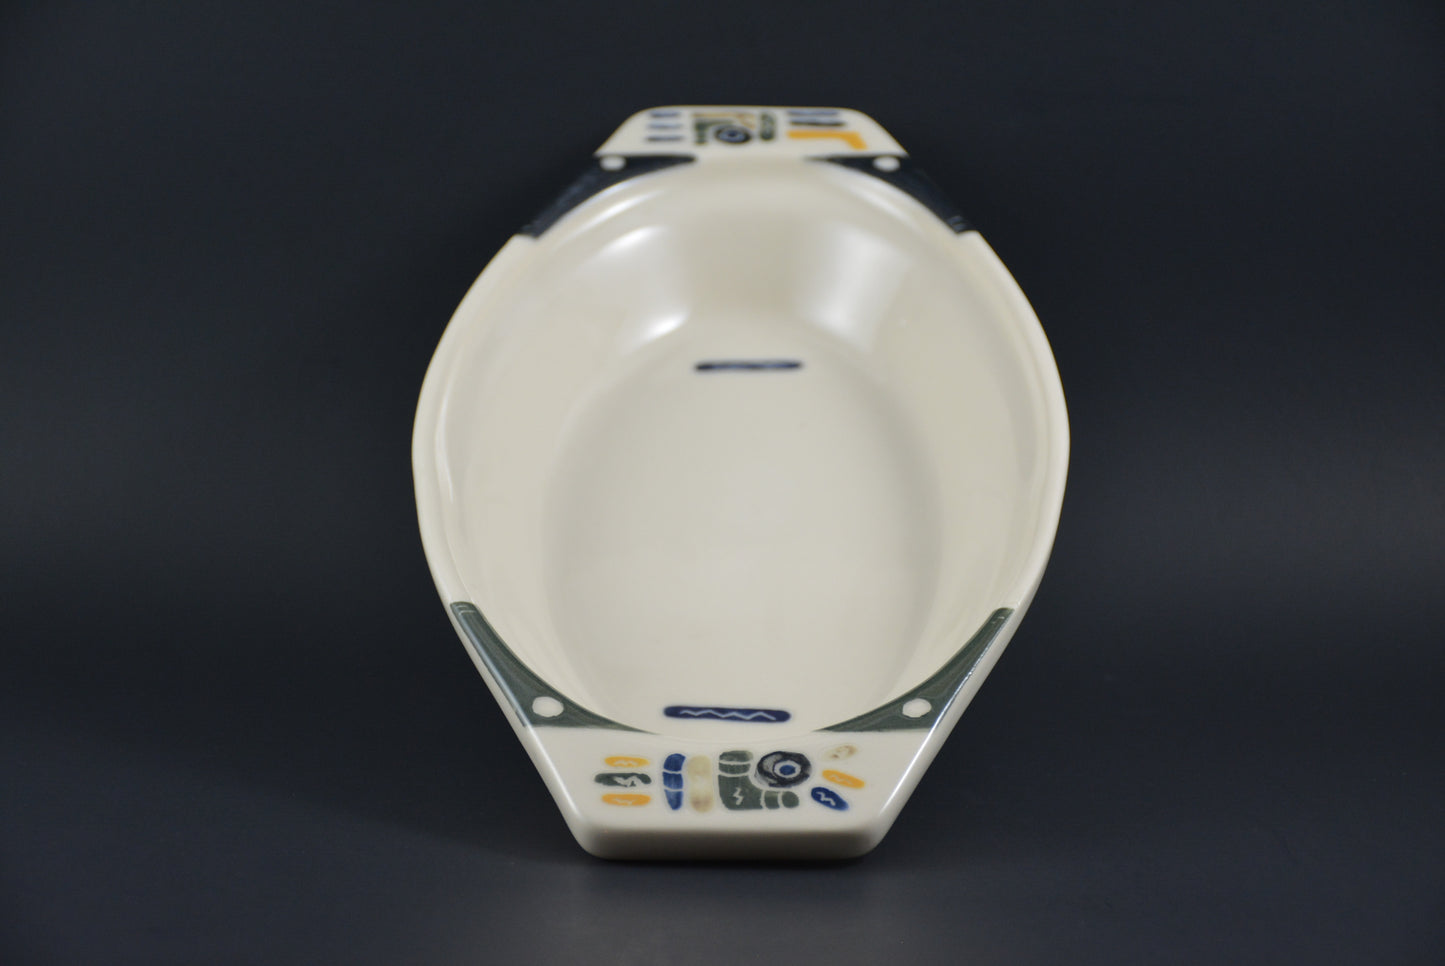 ASC-03 Ceramic Oval hollow plate - Plat Oval de porcelaine